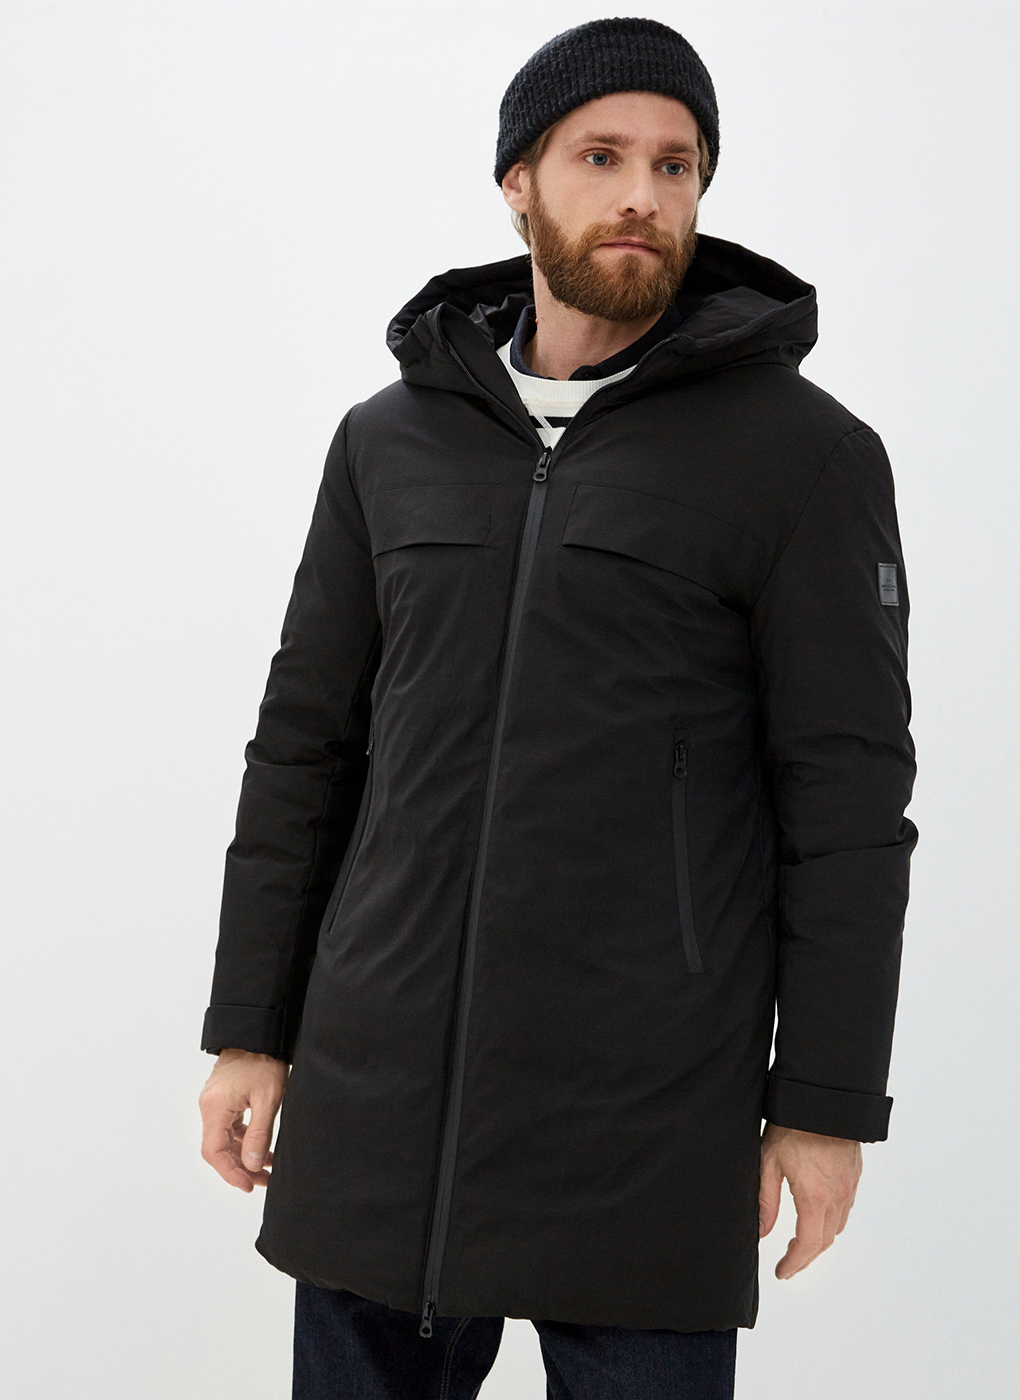 Зимняя куртка мужская WINTERRA 57018 черная 56 RU